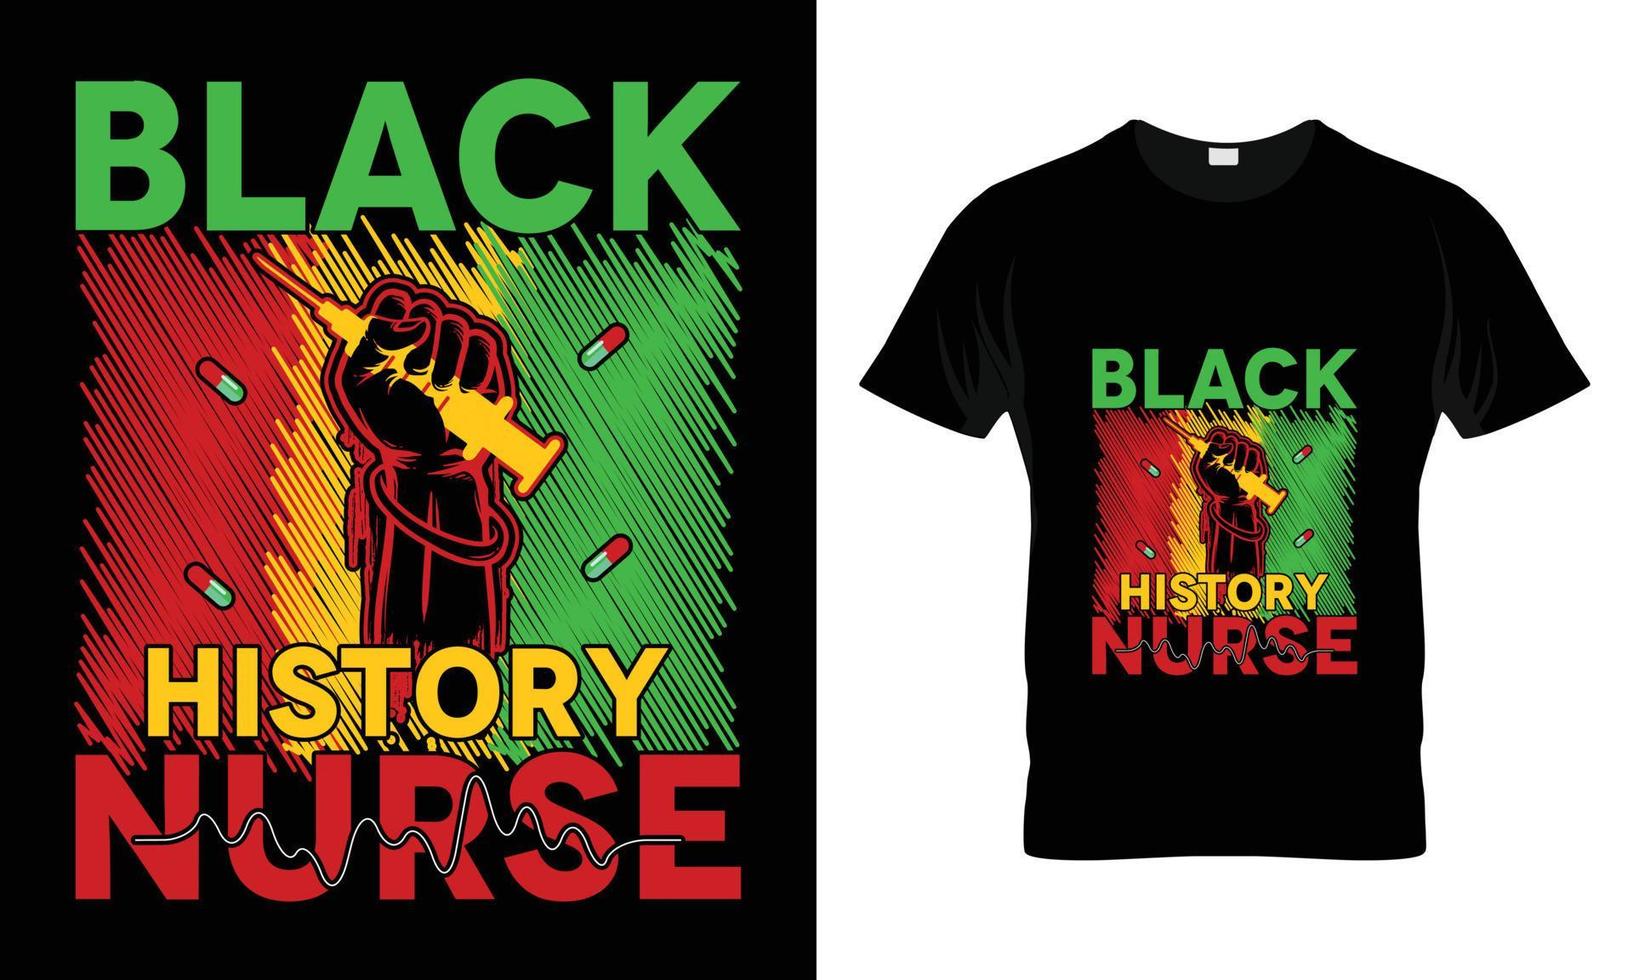 zwart geschiedenis verpleegster t-shirt ontwerp vector